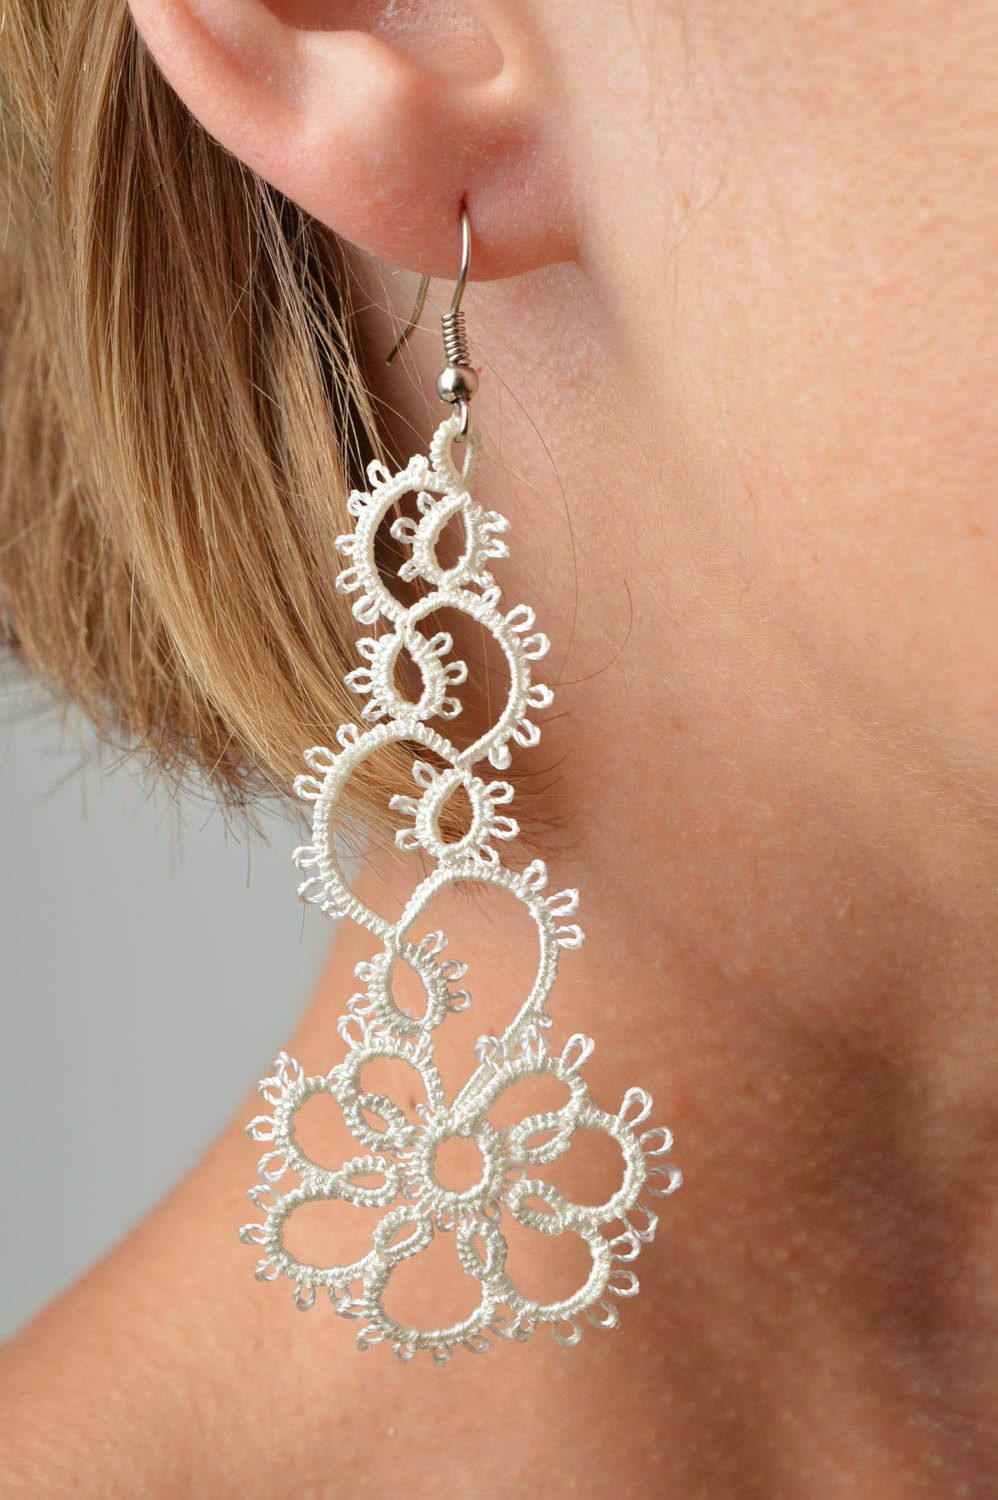 Handmade woven lace earrings textile earrings bridal jewelry designs gift ideas photo 1